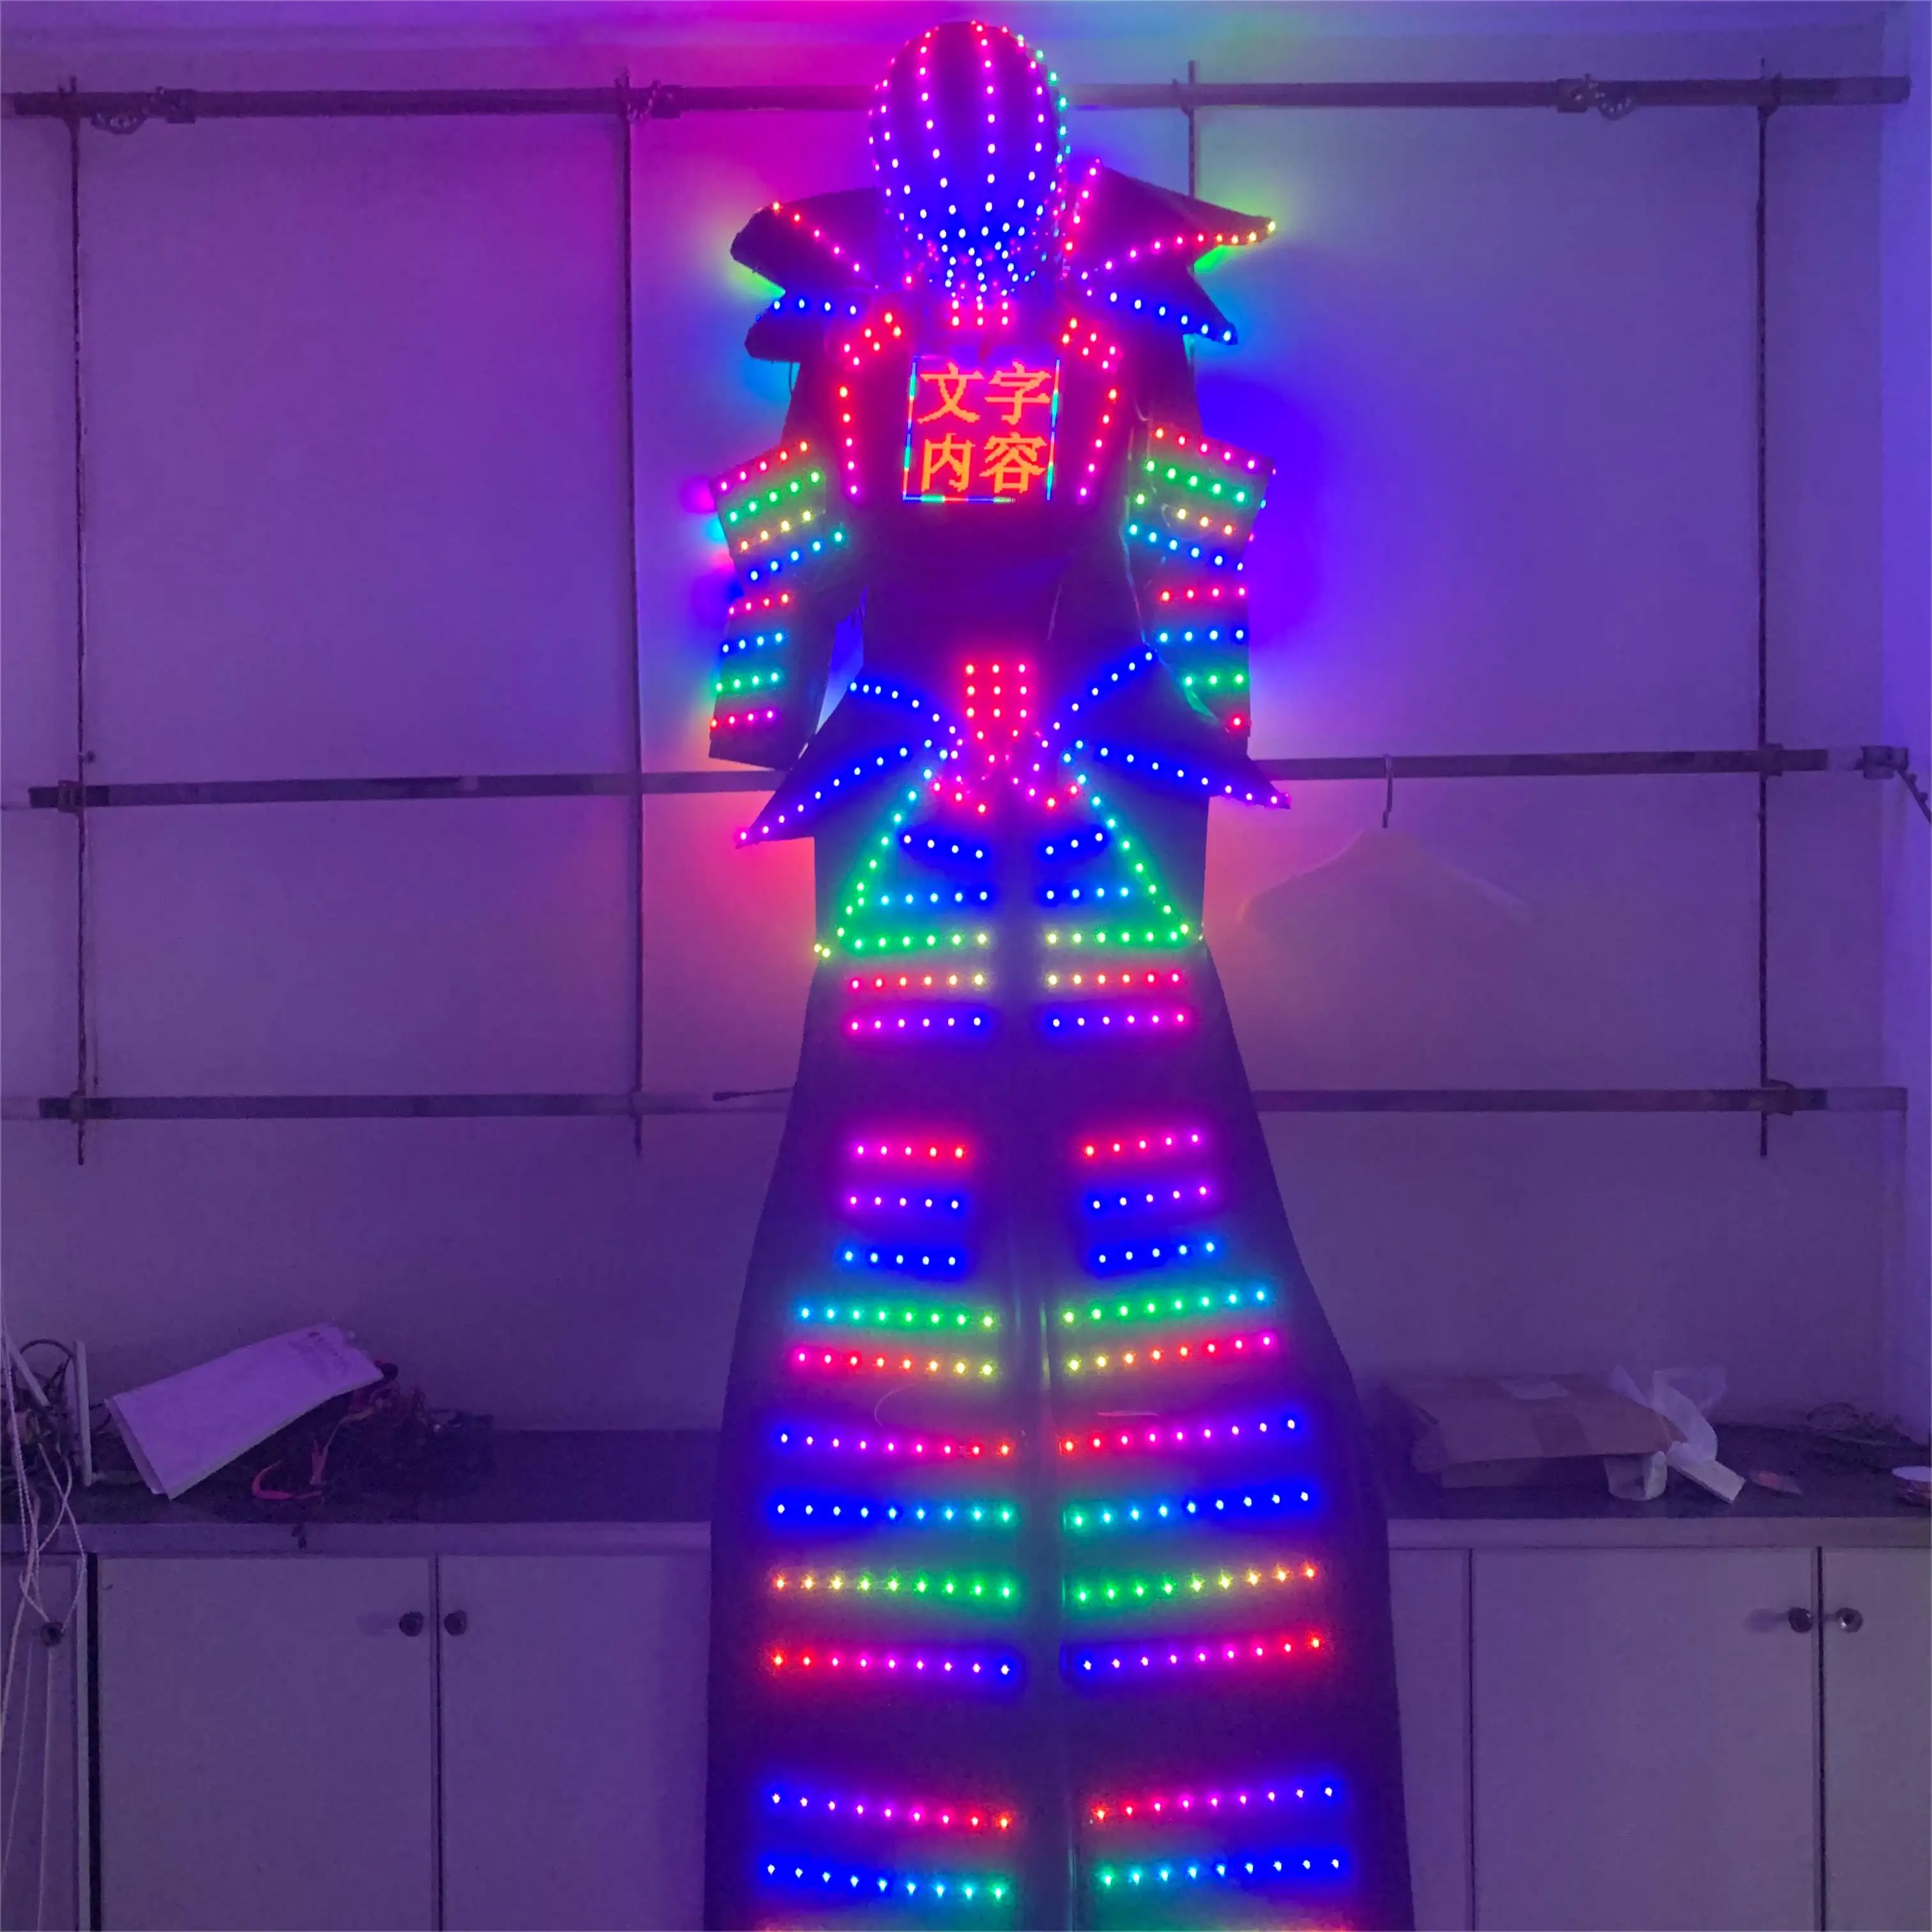 LED adult stilts walker Ballroom party suit for adult robot costume for event show